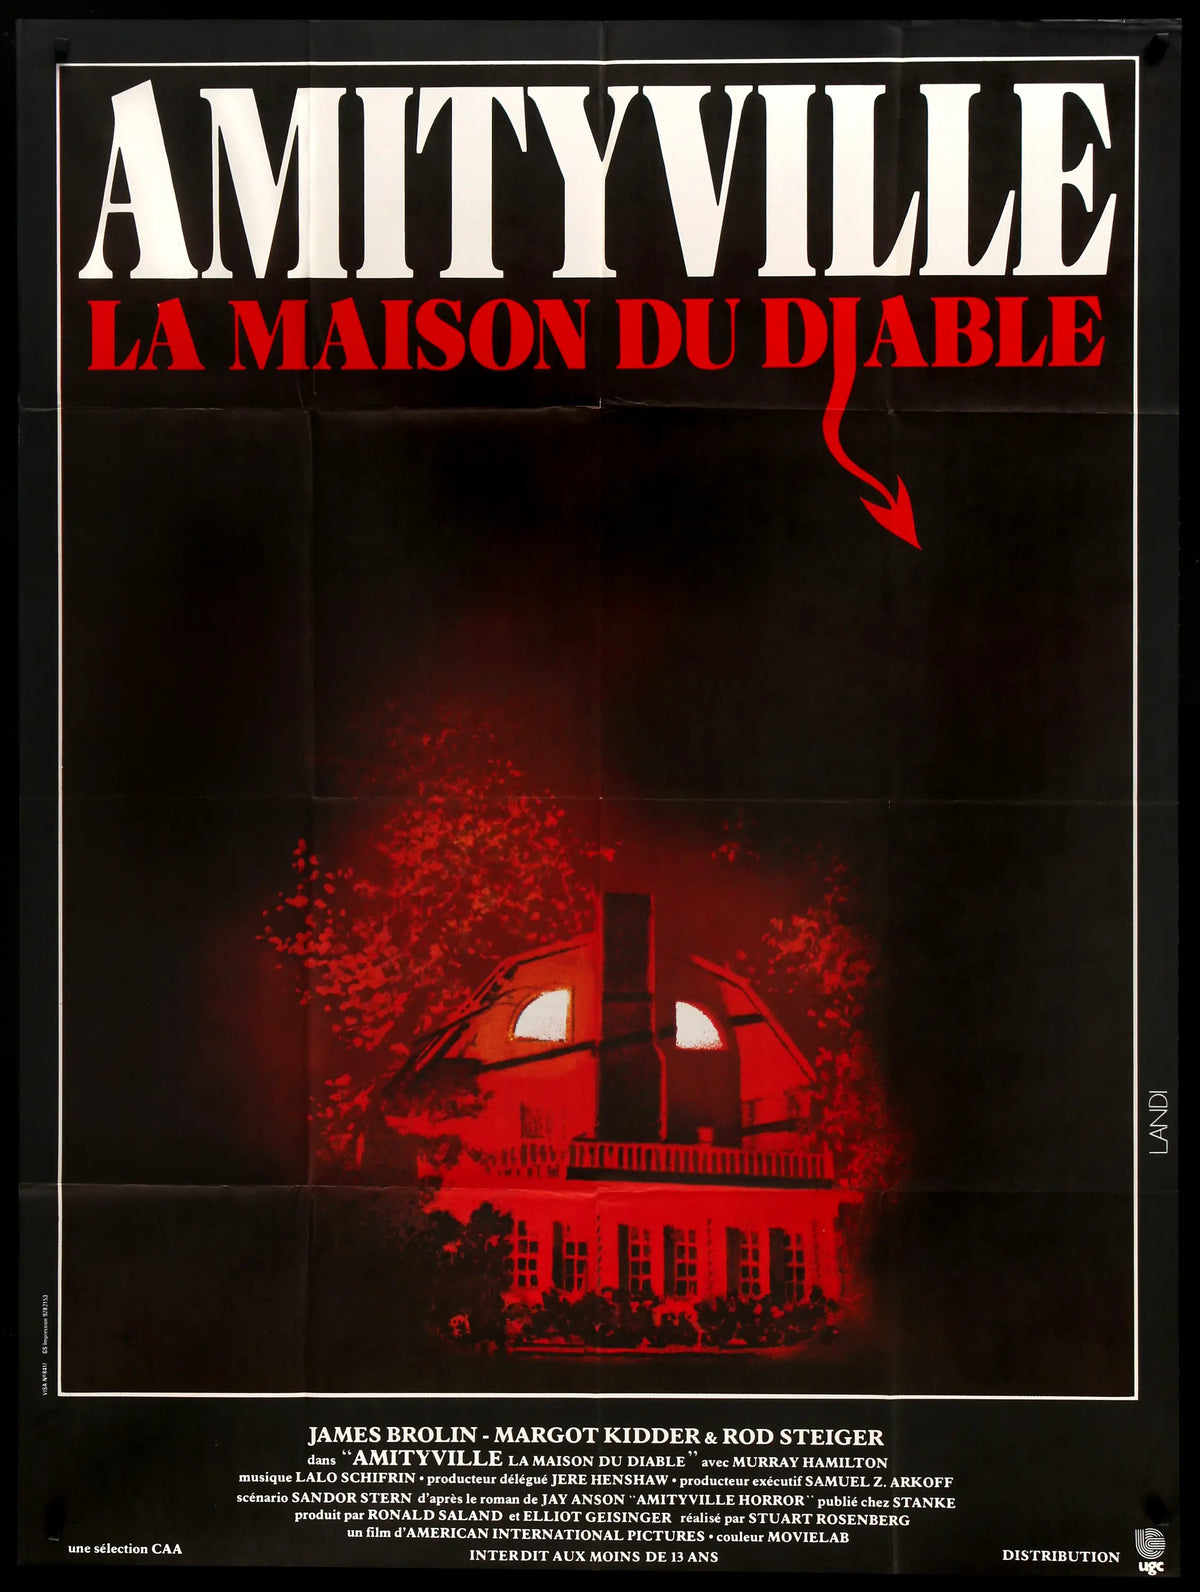 Amityville Horror (1979) original movie poster for sale at Original Film Art